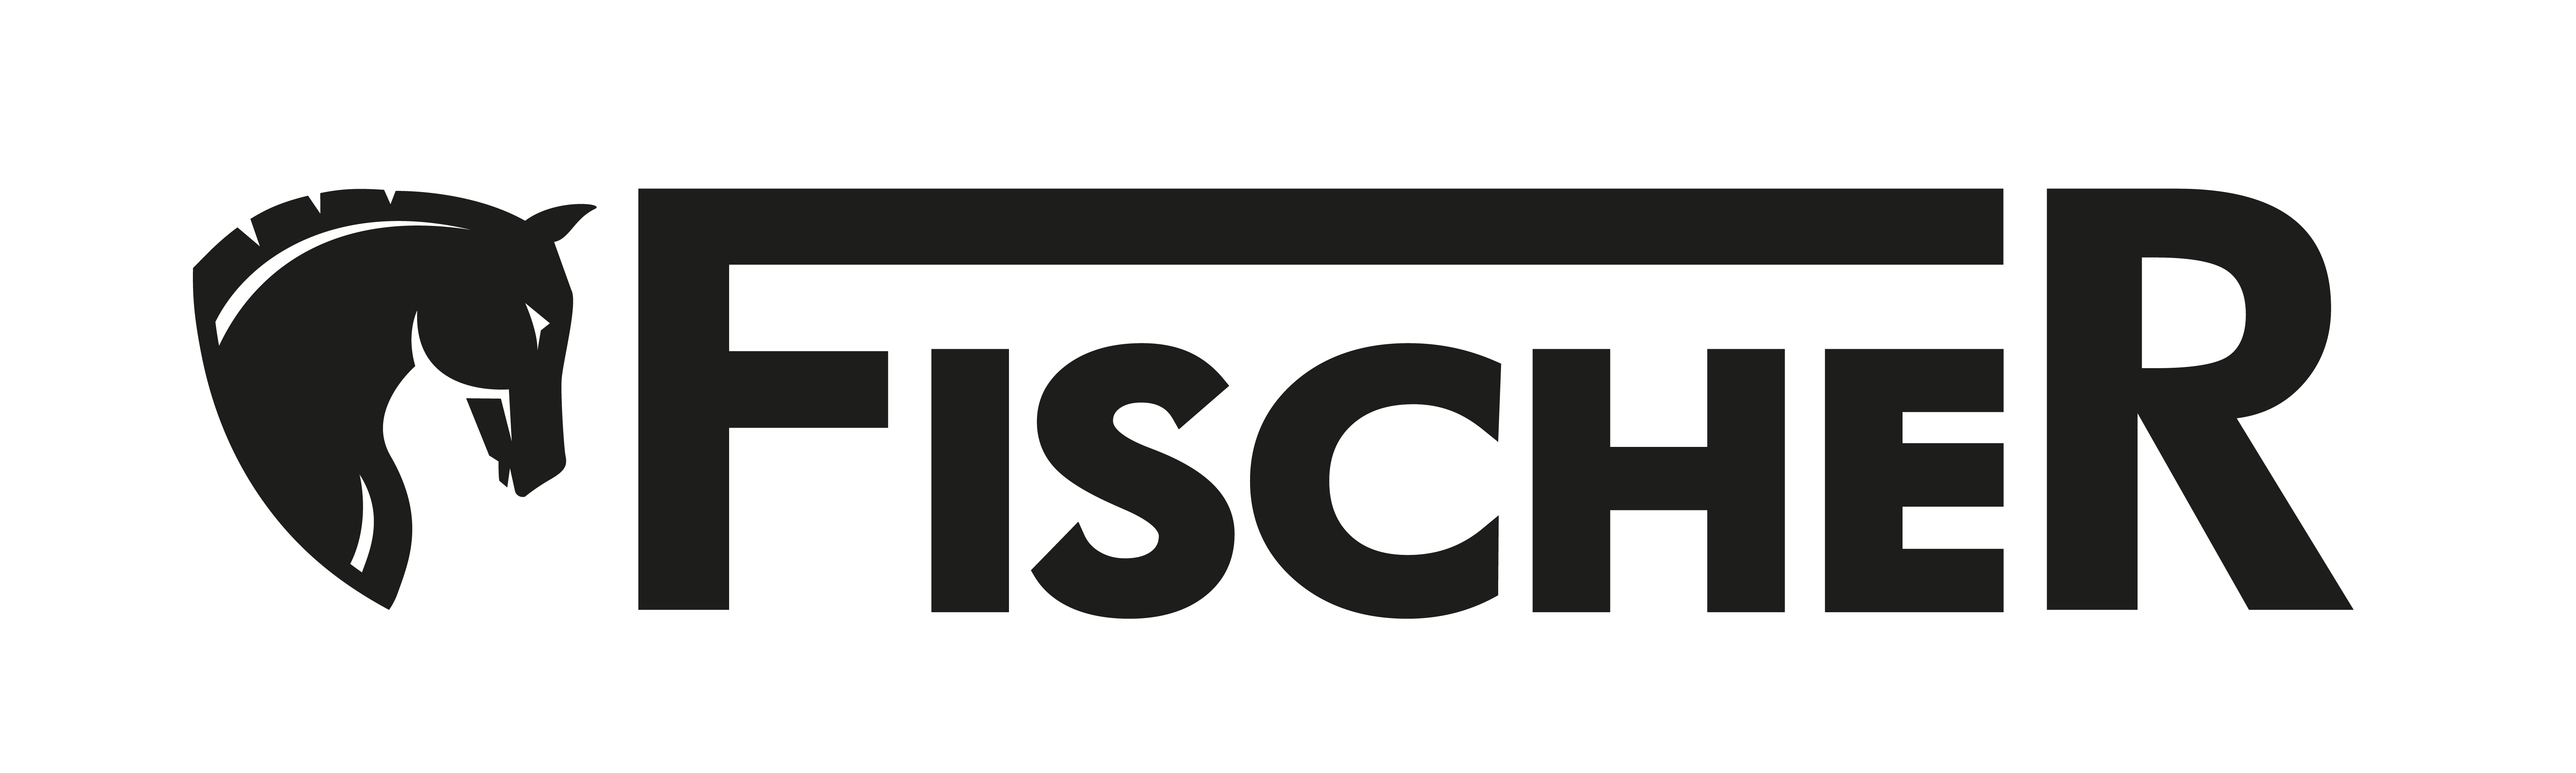 Fischer_Logo_black.png